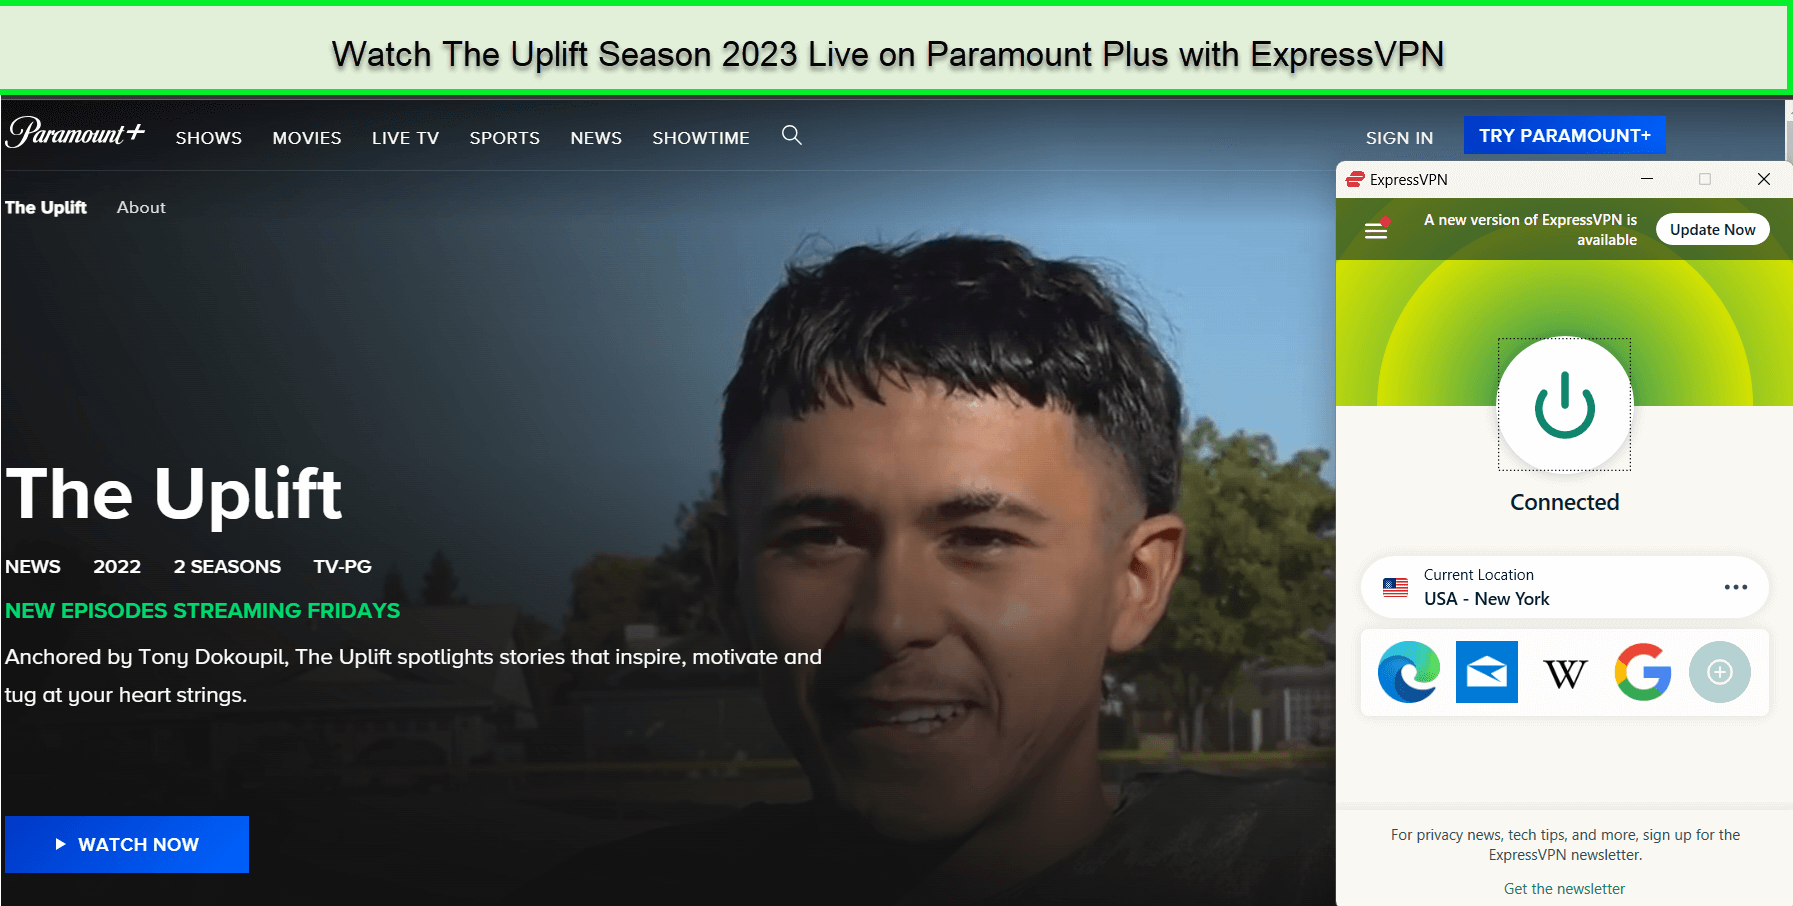  Mira la temporada Uplift 2023 en vivo  -  En Paramount Plus. 